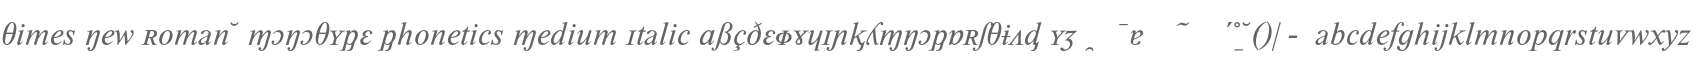 Times New Roman* MONOTYPE Phonetics Medium Italic